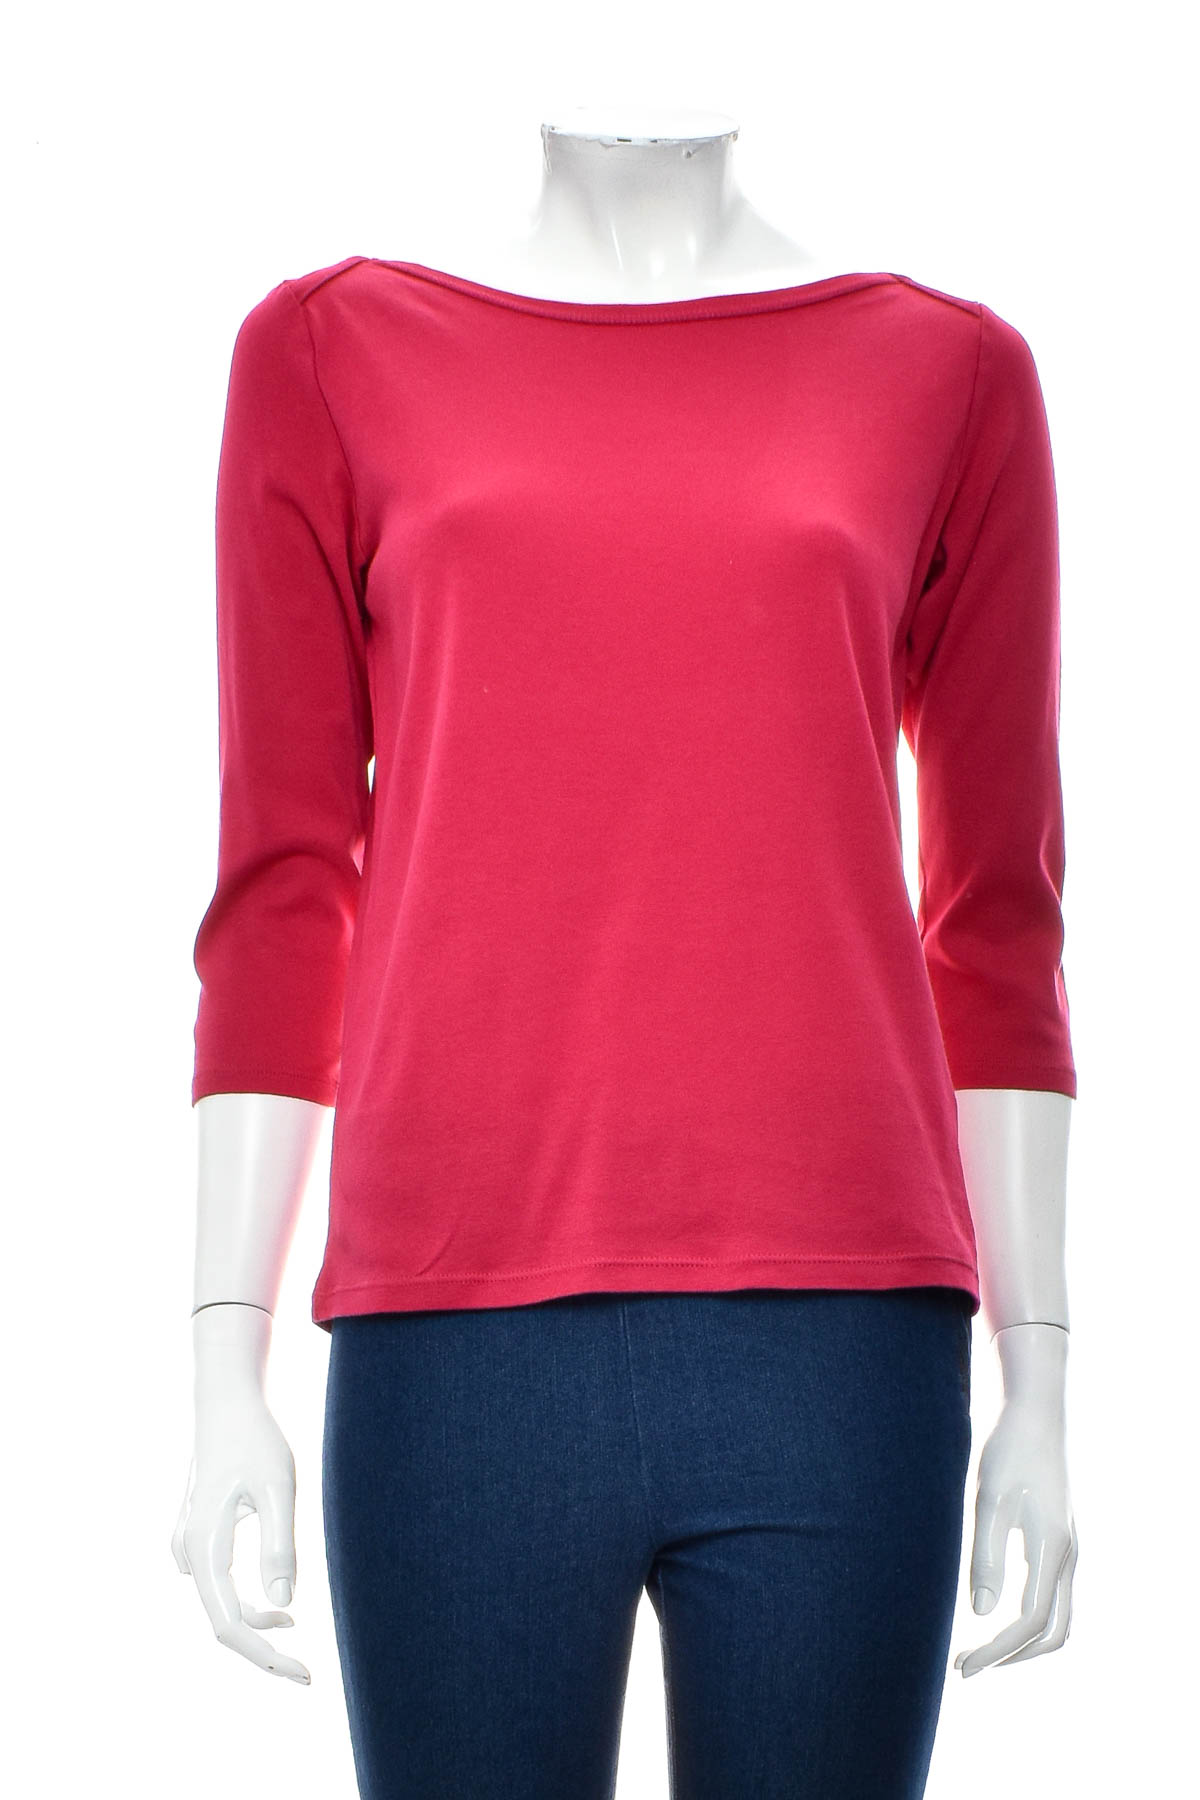 Women's blouse - United Colors of Benetton - 0